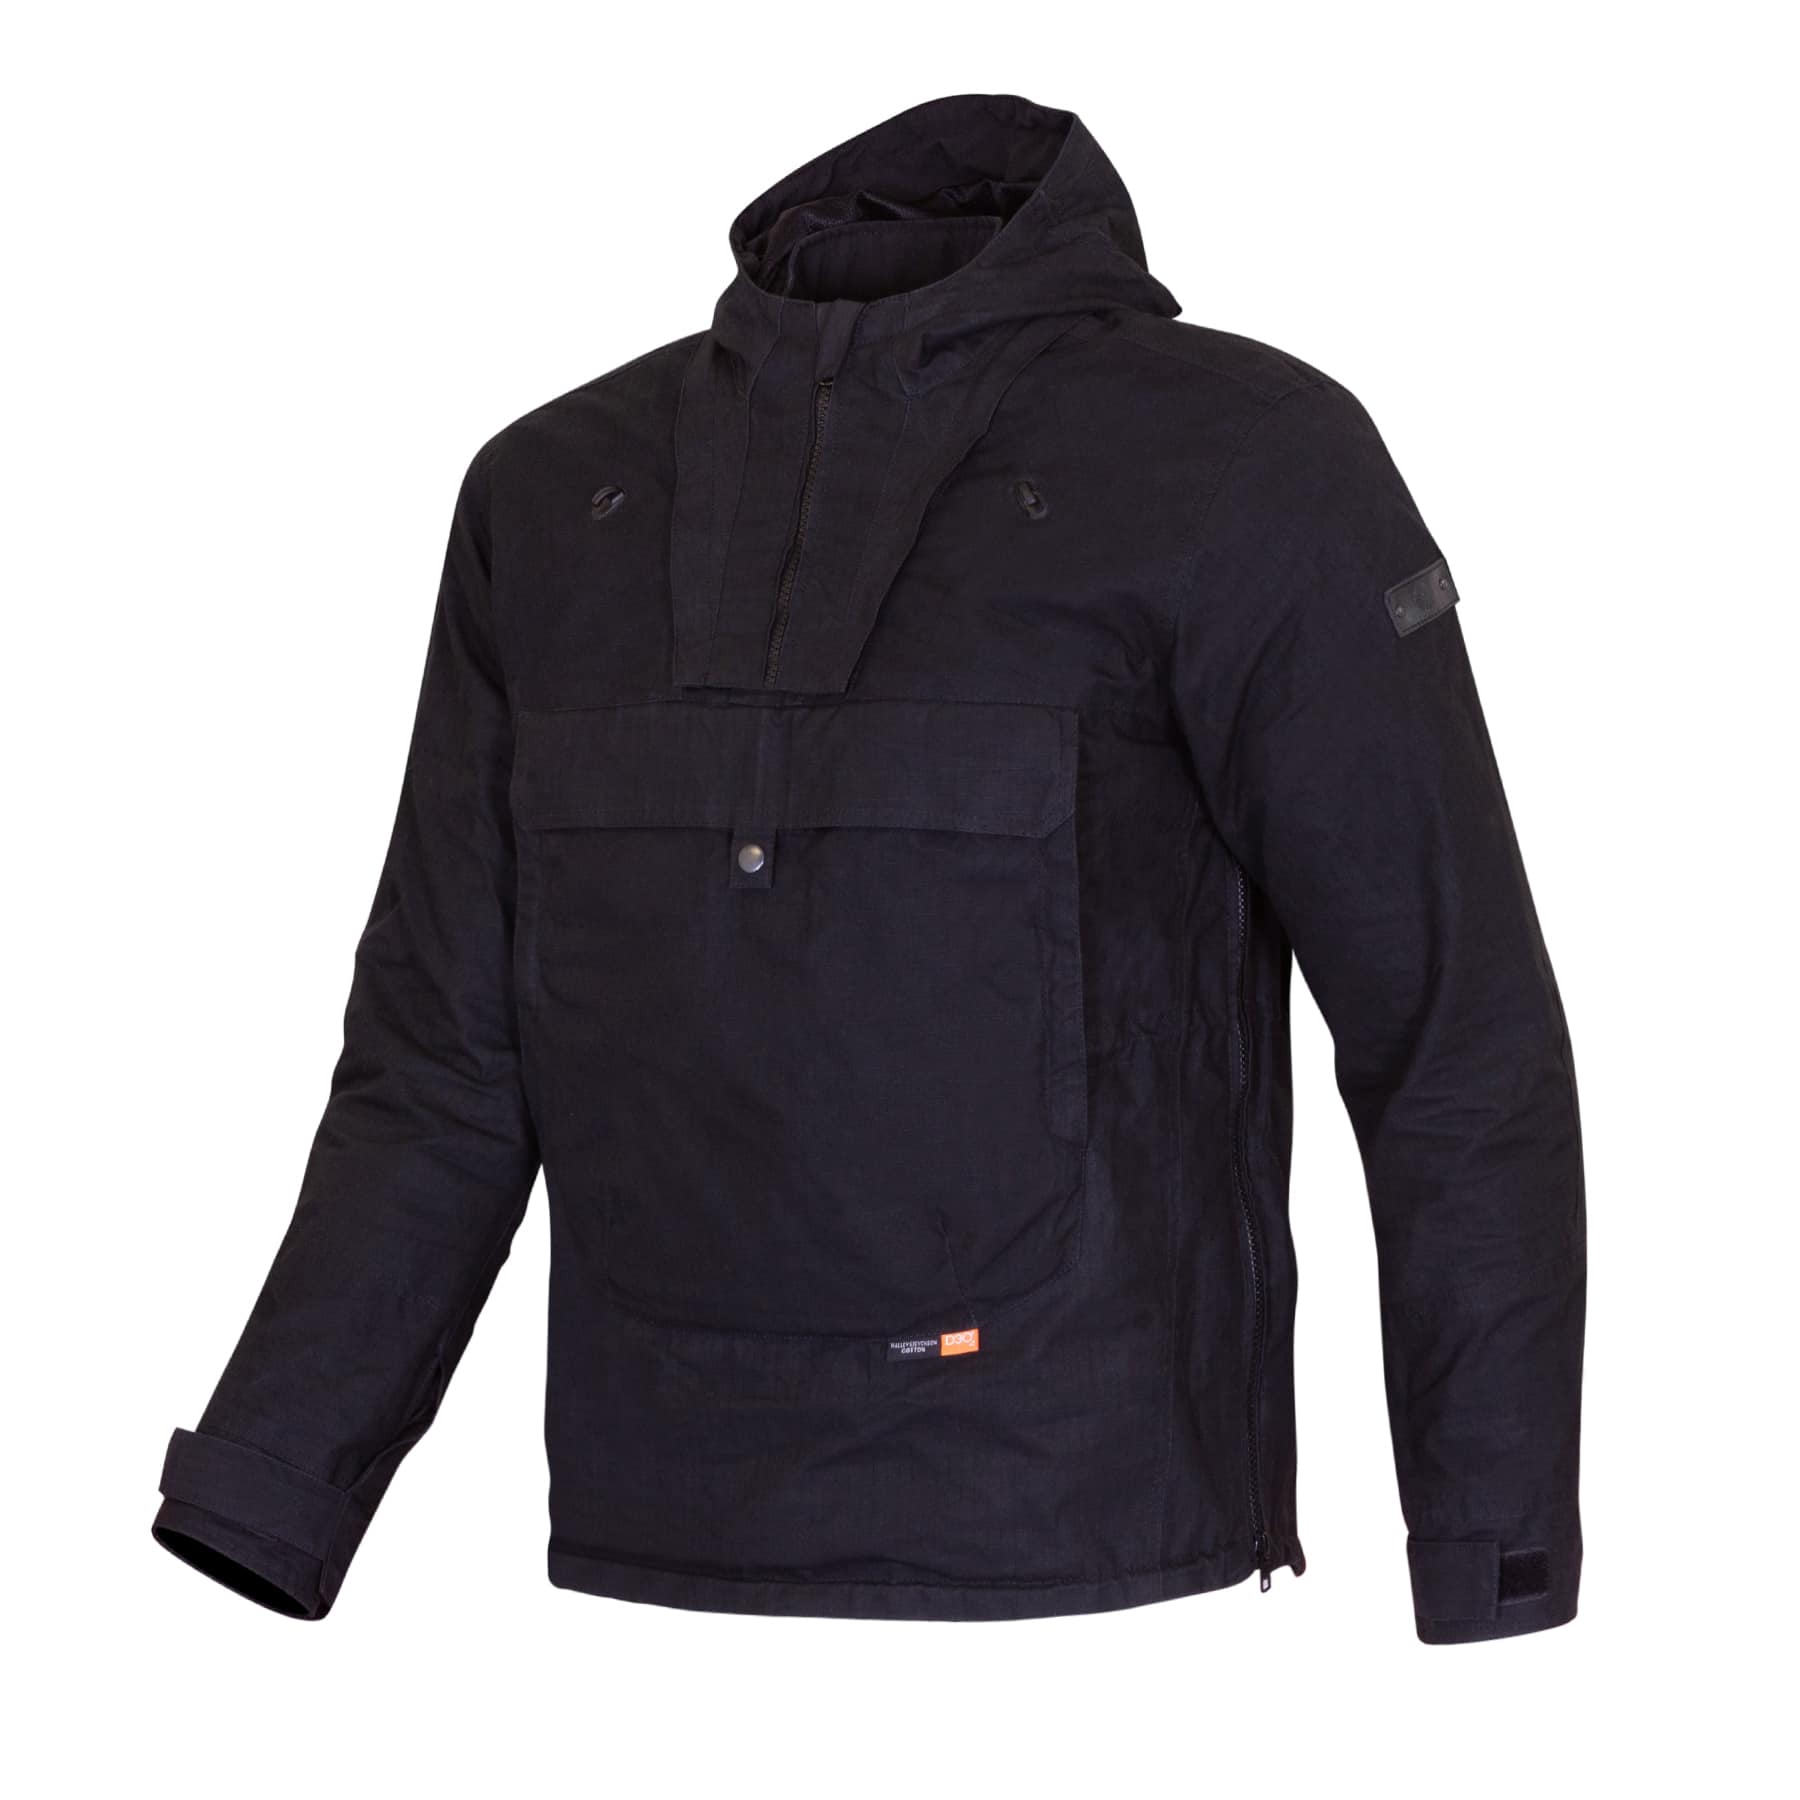 Merlin Explorer Smock jacket in black